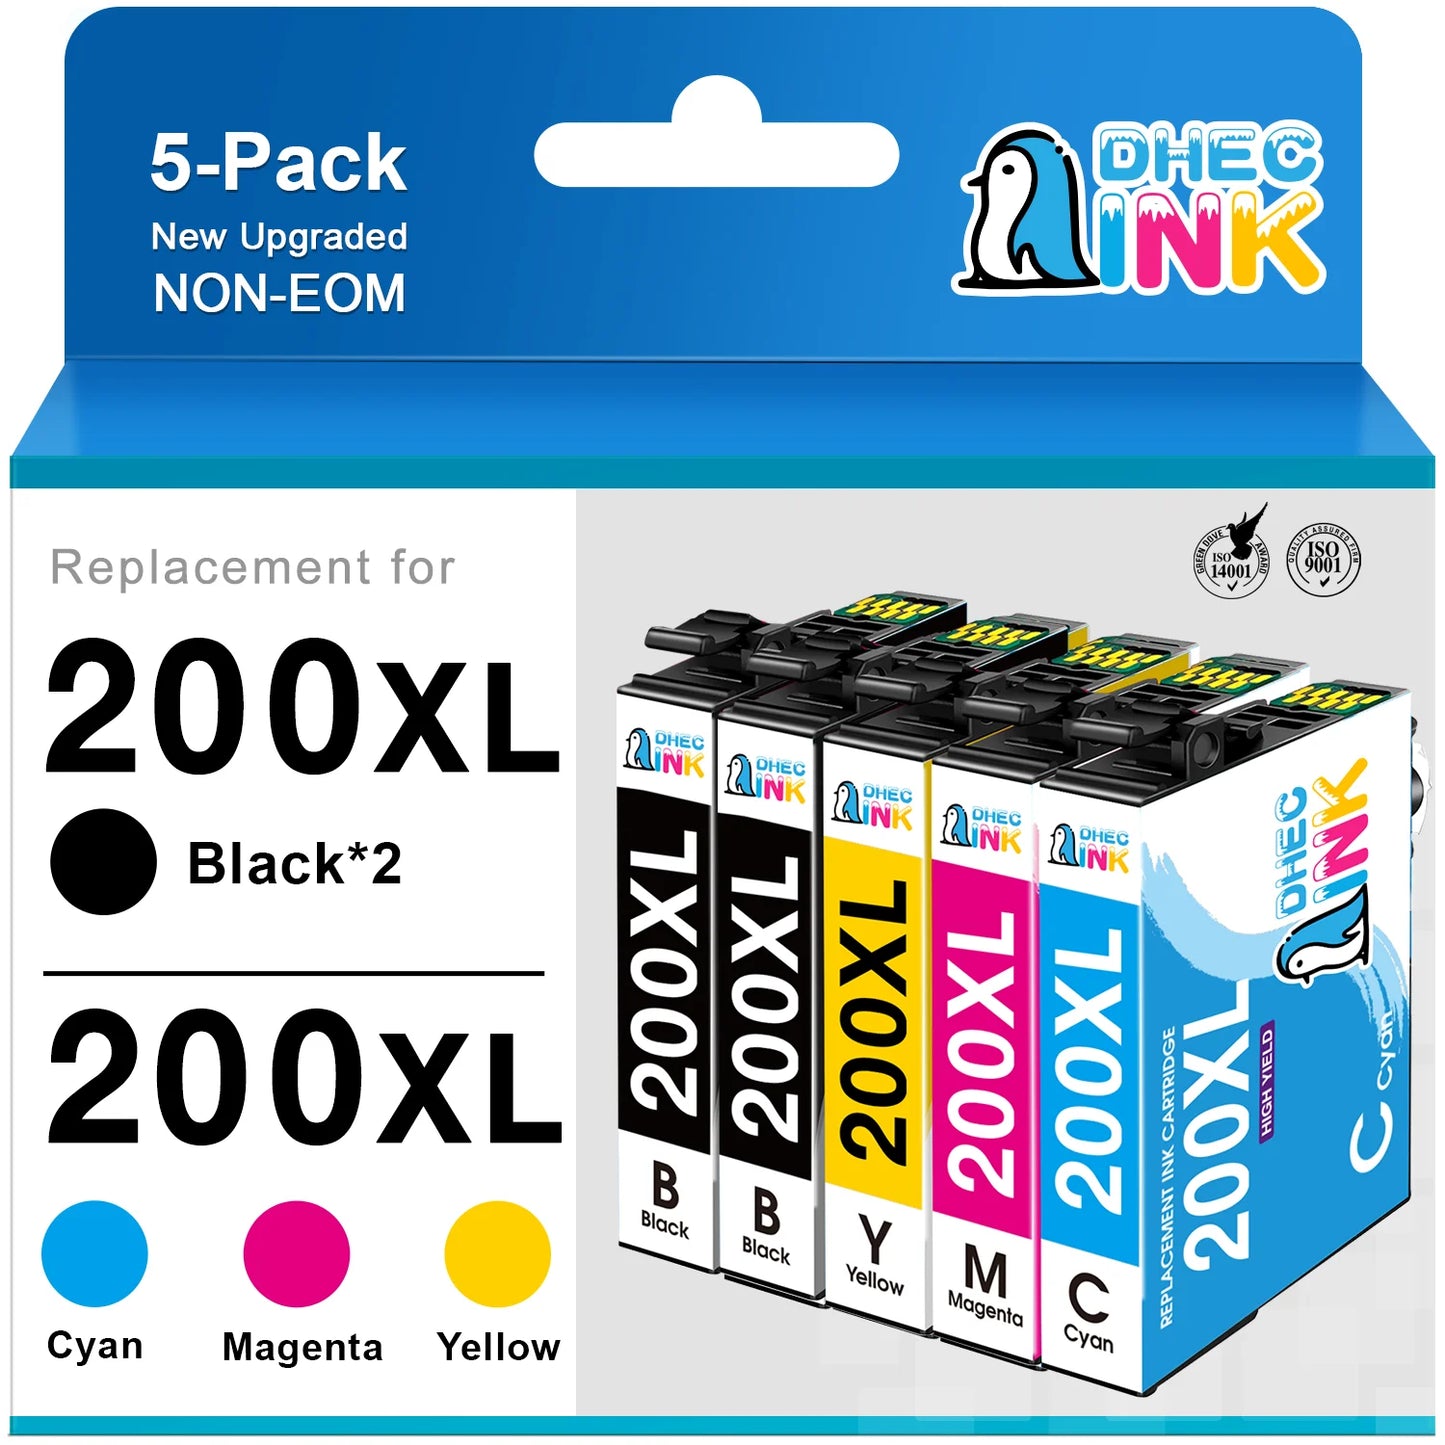 200XL Ink Cartridge for Epson Ink 200 XL 200XL T200 T200XL for Epson Expression XP-200 XP-300 XP-310 XP-400 Workforce WF-2520 WF-2530 Printer(2 Black, 1 Cyan, 1 Magenta, 1 Yellow, 5 Pack)